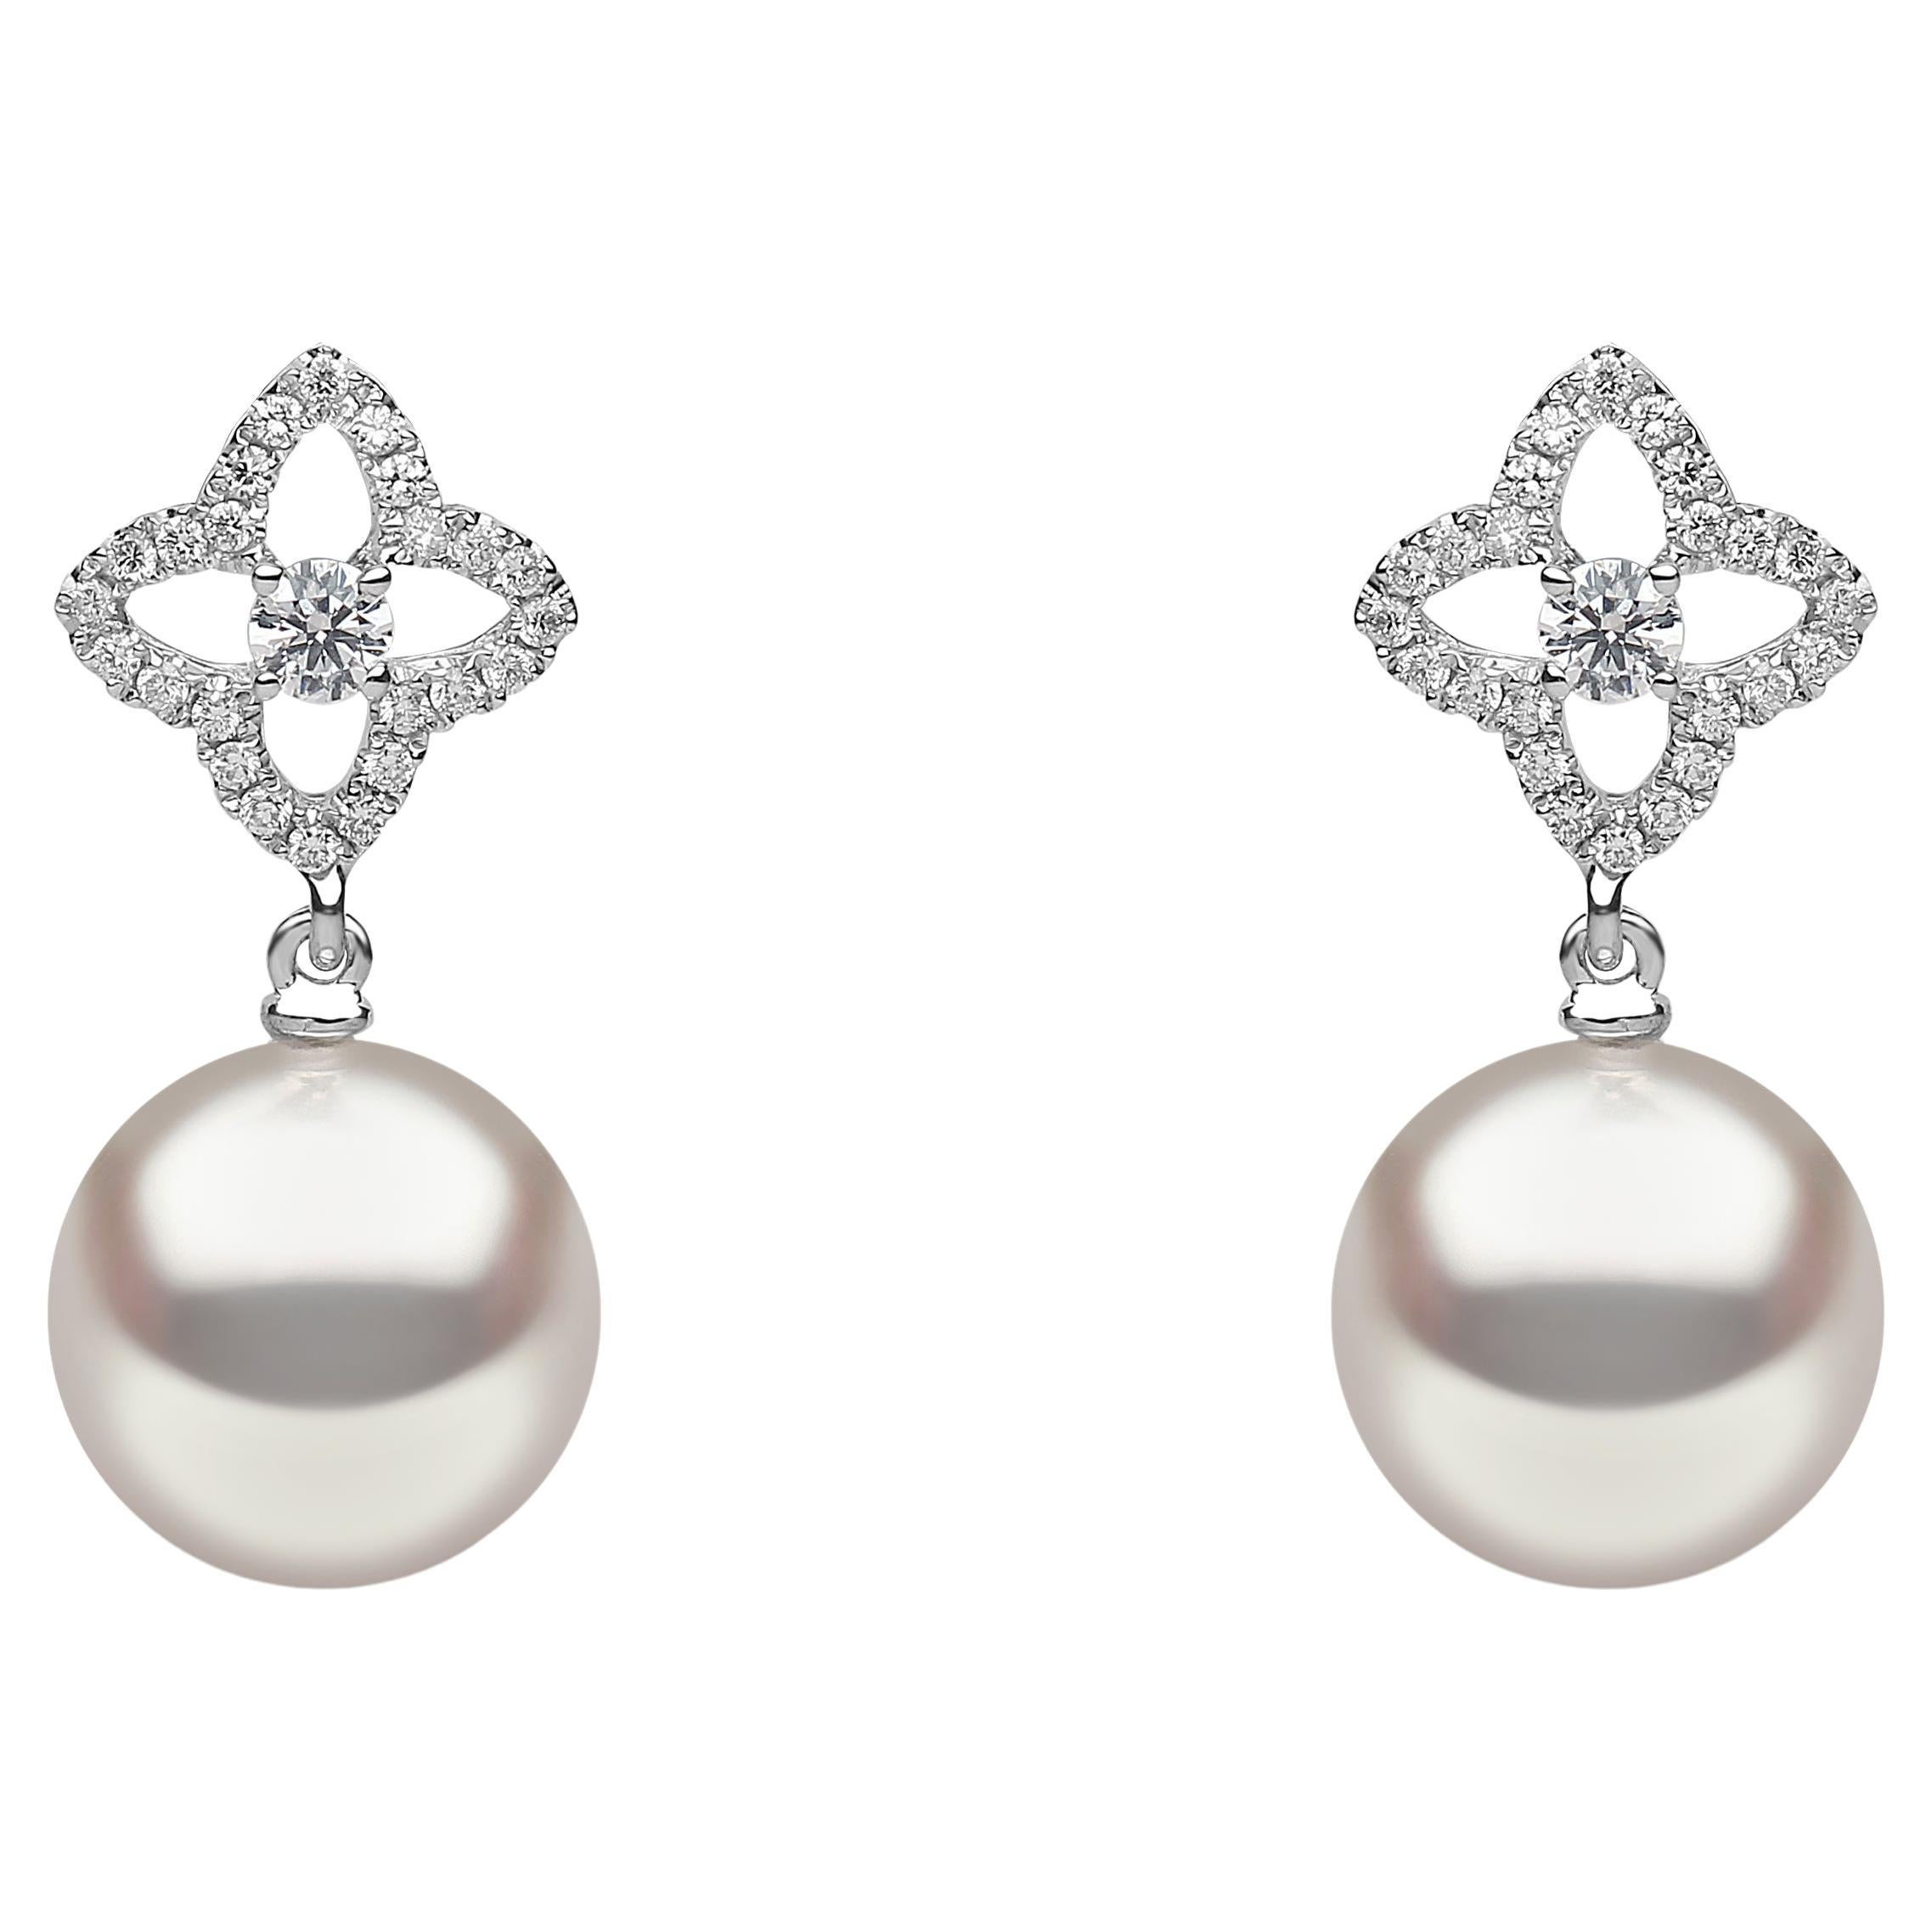 Yoko London South Sea Pearl and Diamond Earrings in 18K White Gold